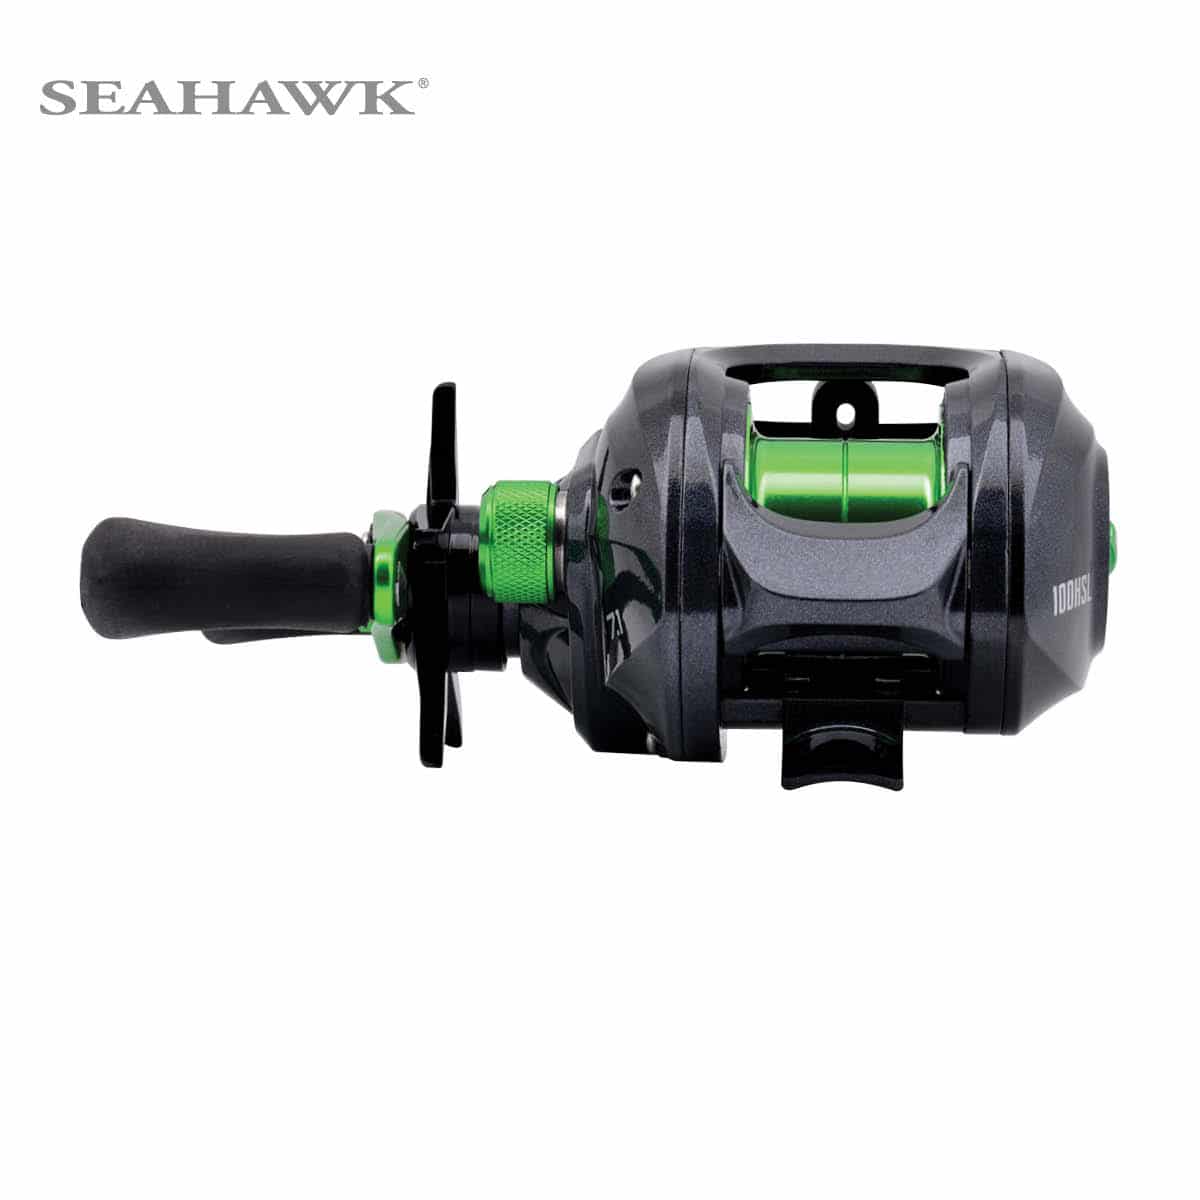 seahawk-stinger-x-05